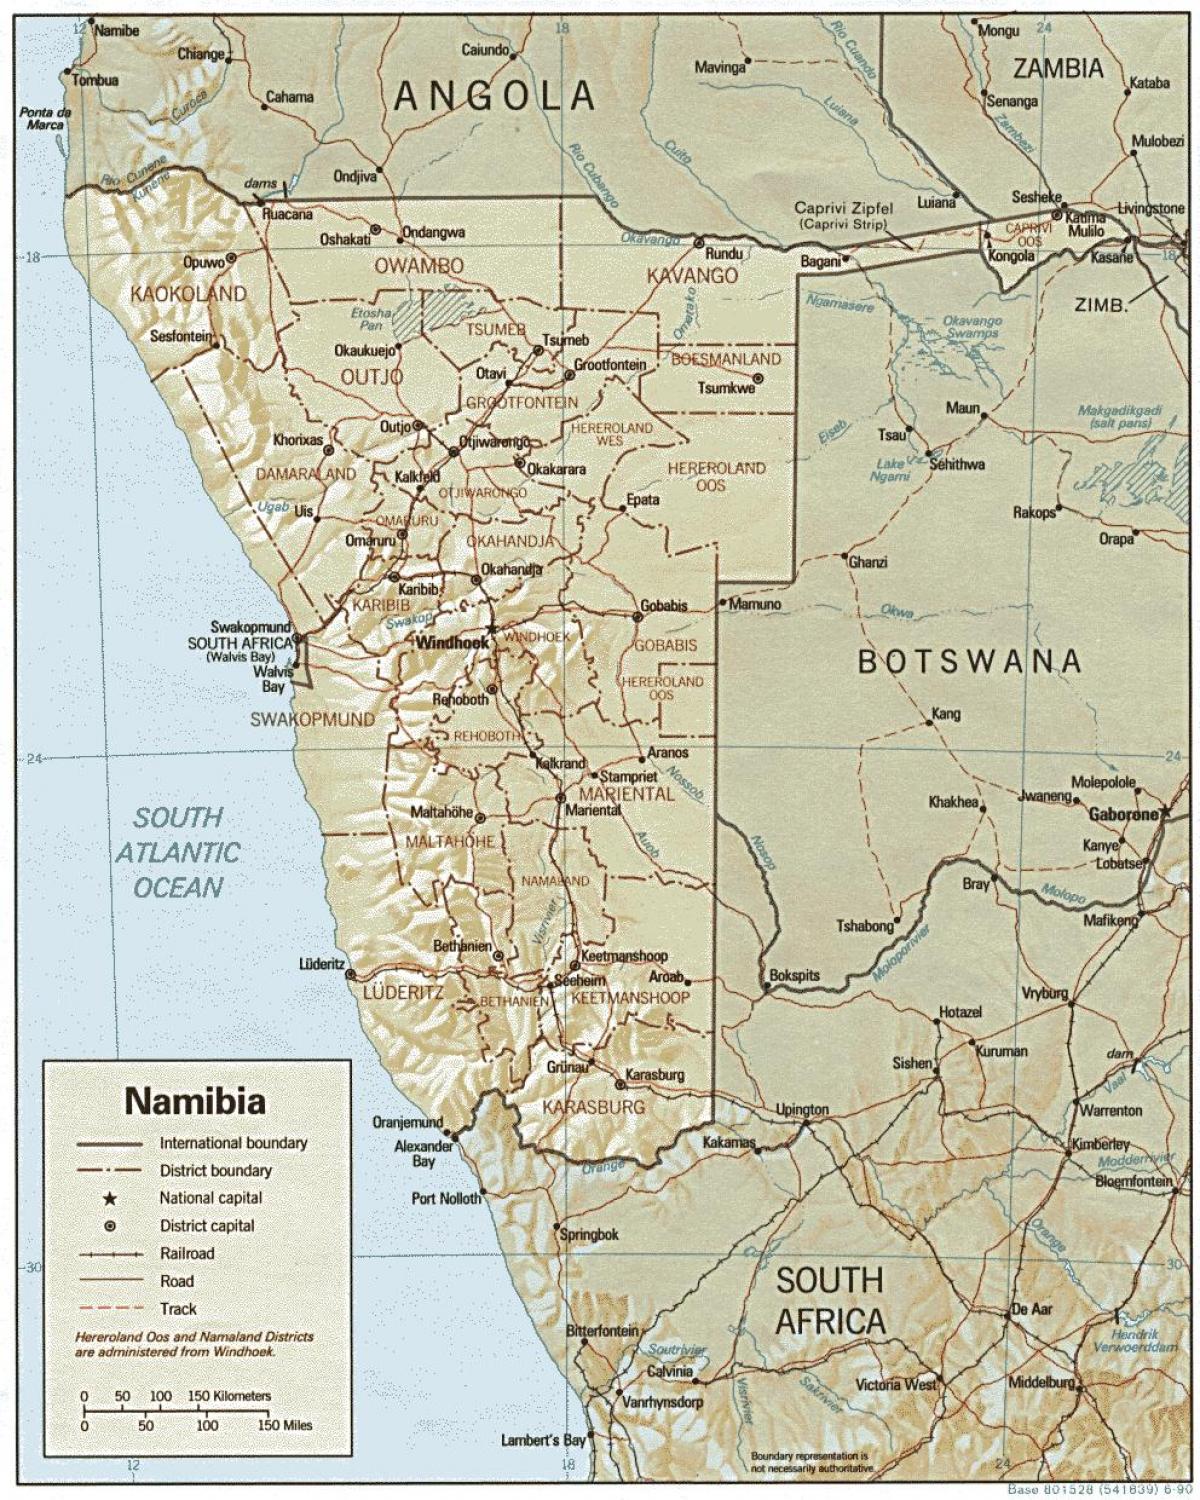 Harta e Namibisë ferma